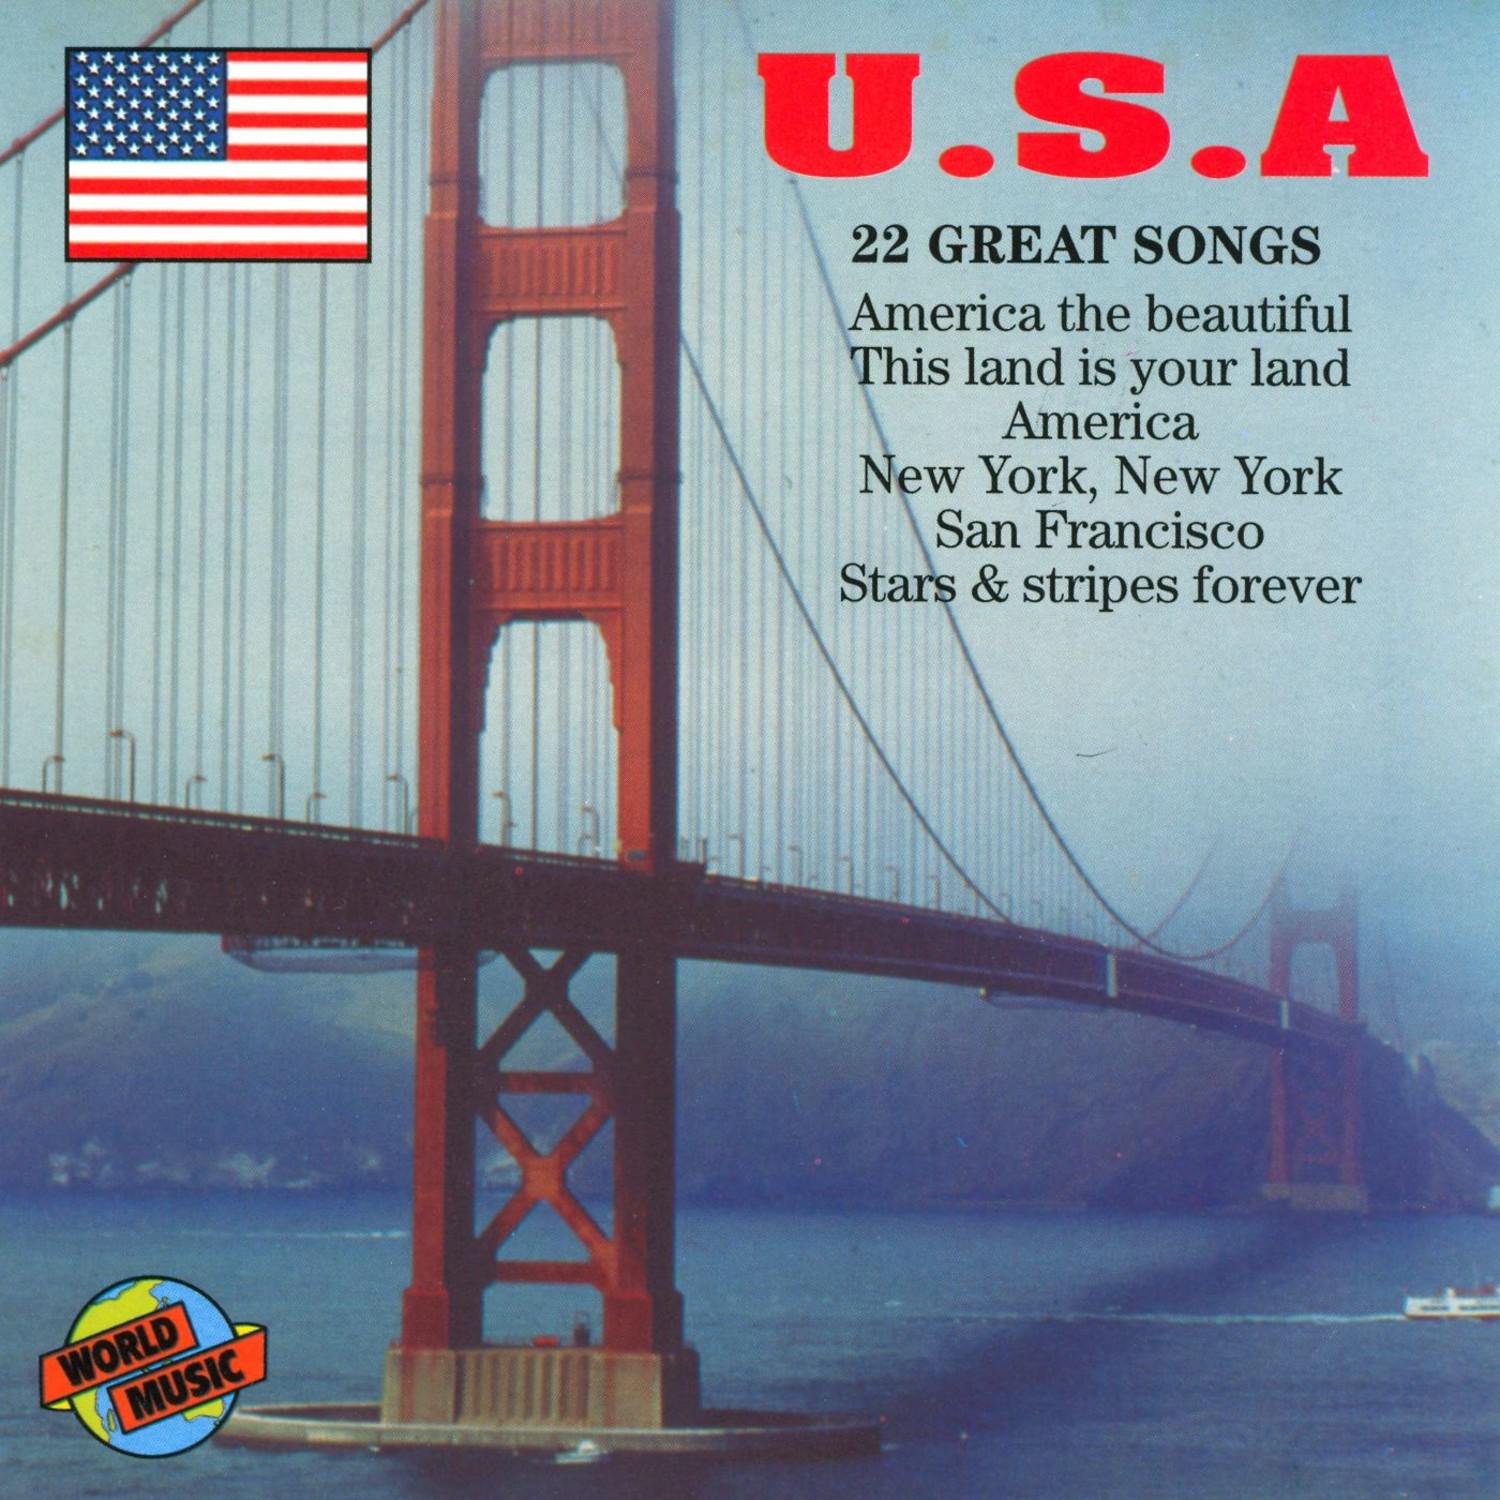 U.S.A. - 22 Great Songs